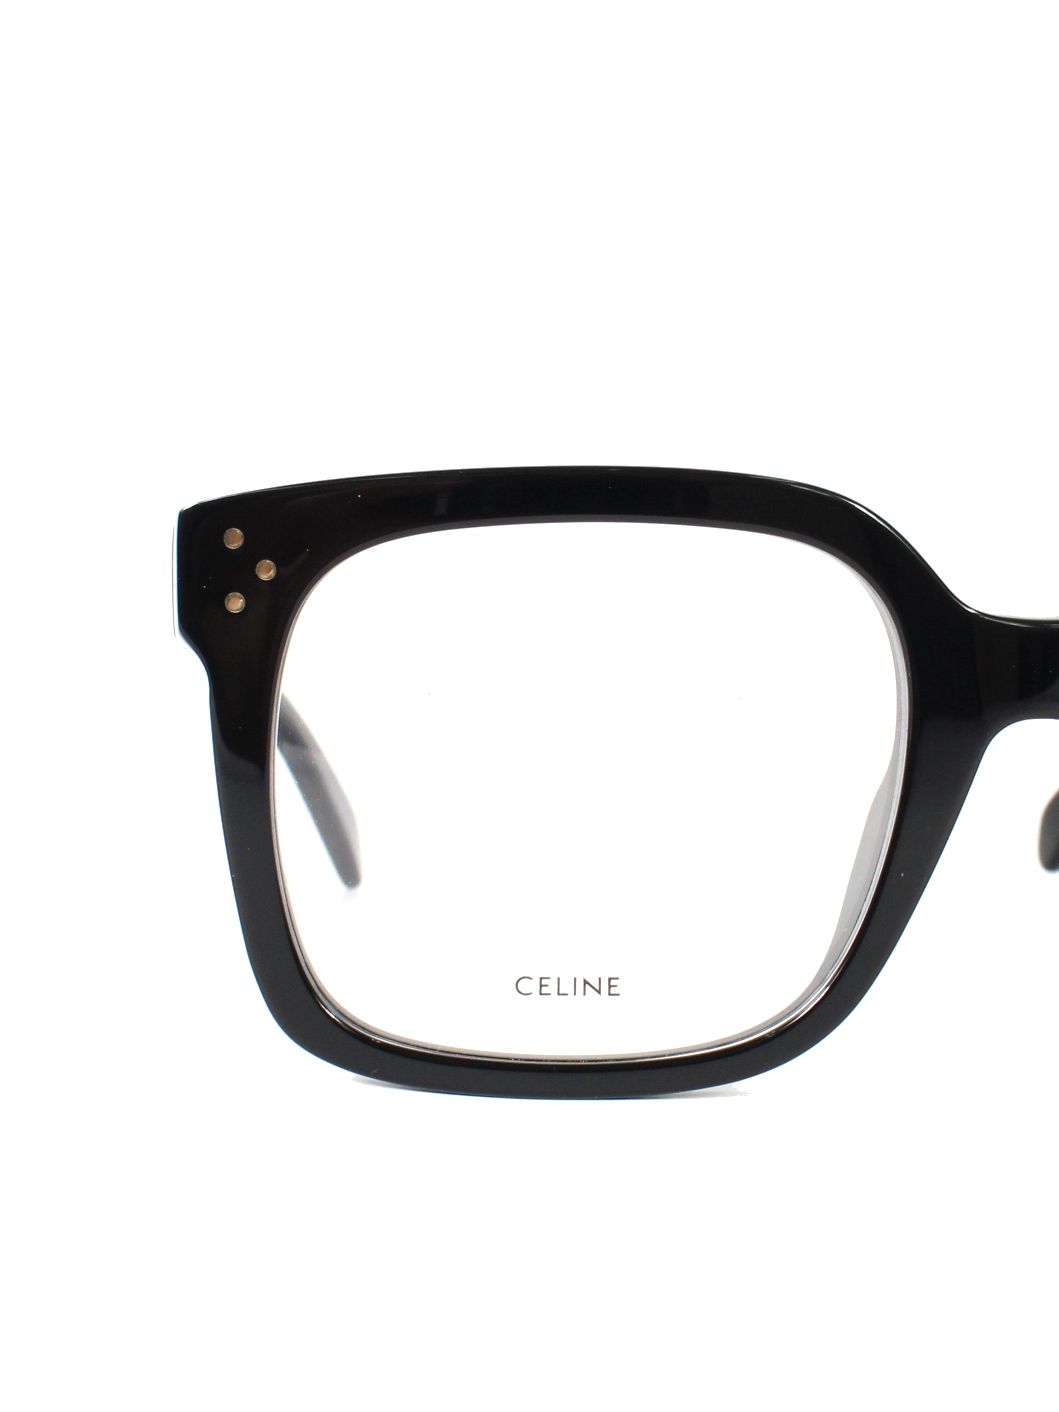 CELINE - アイウェア メガネ フレーム / GLASSES FRAME / ブラック | STORY